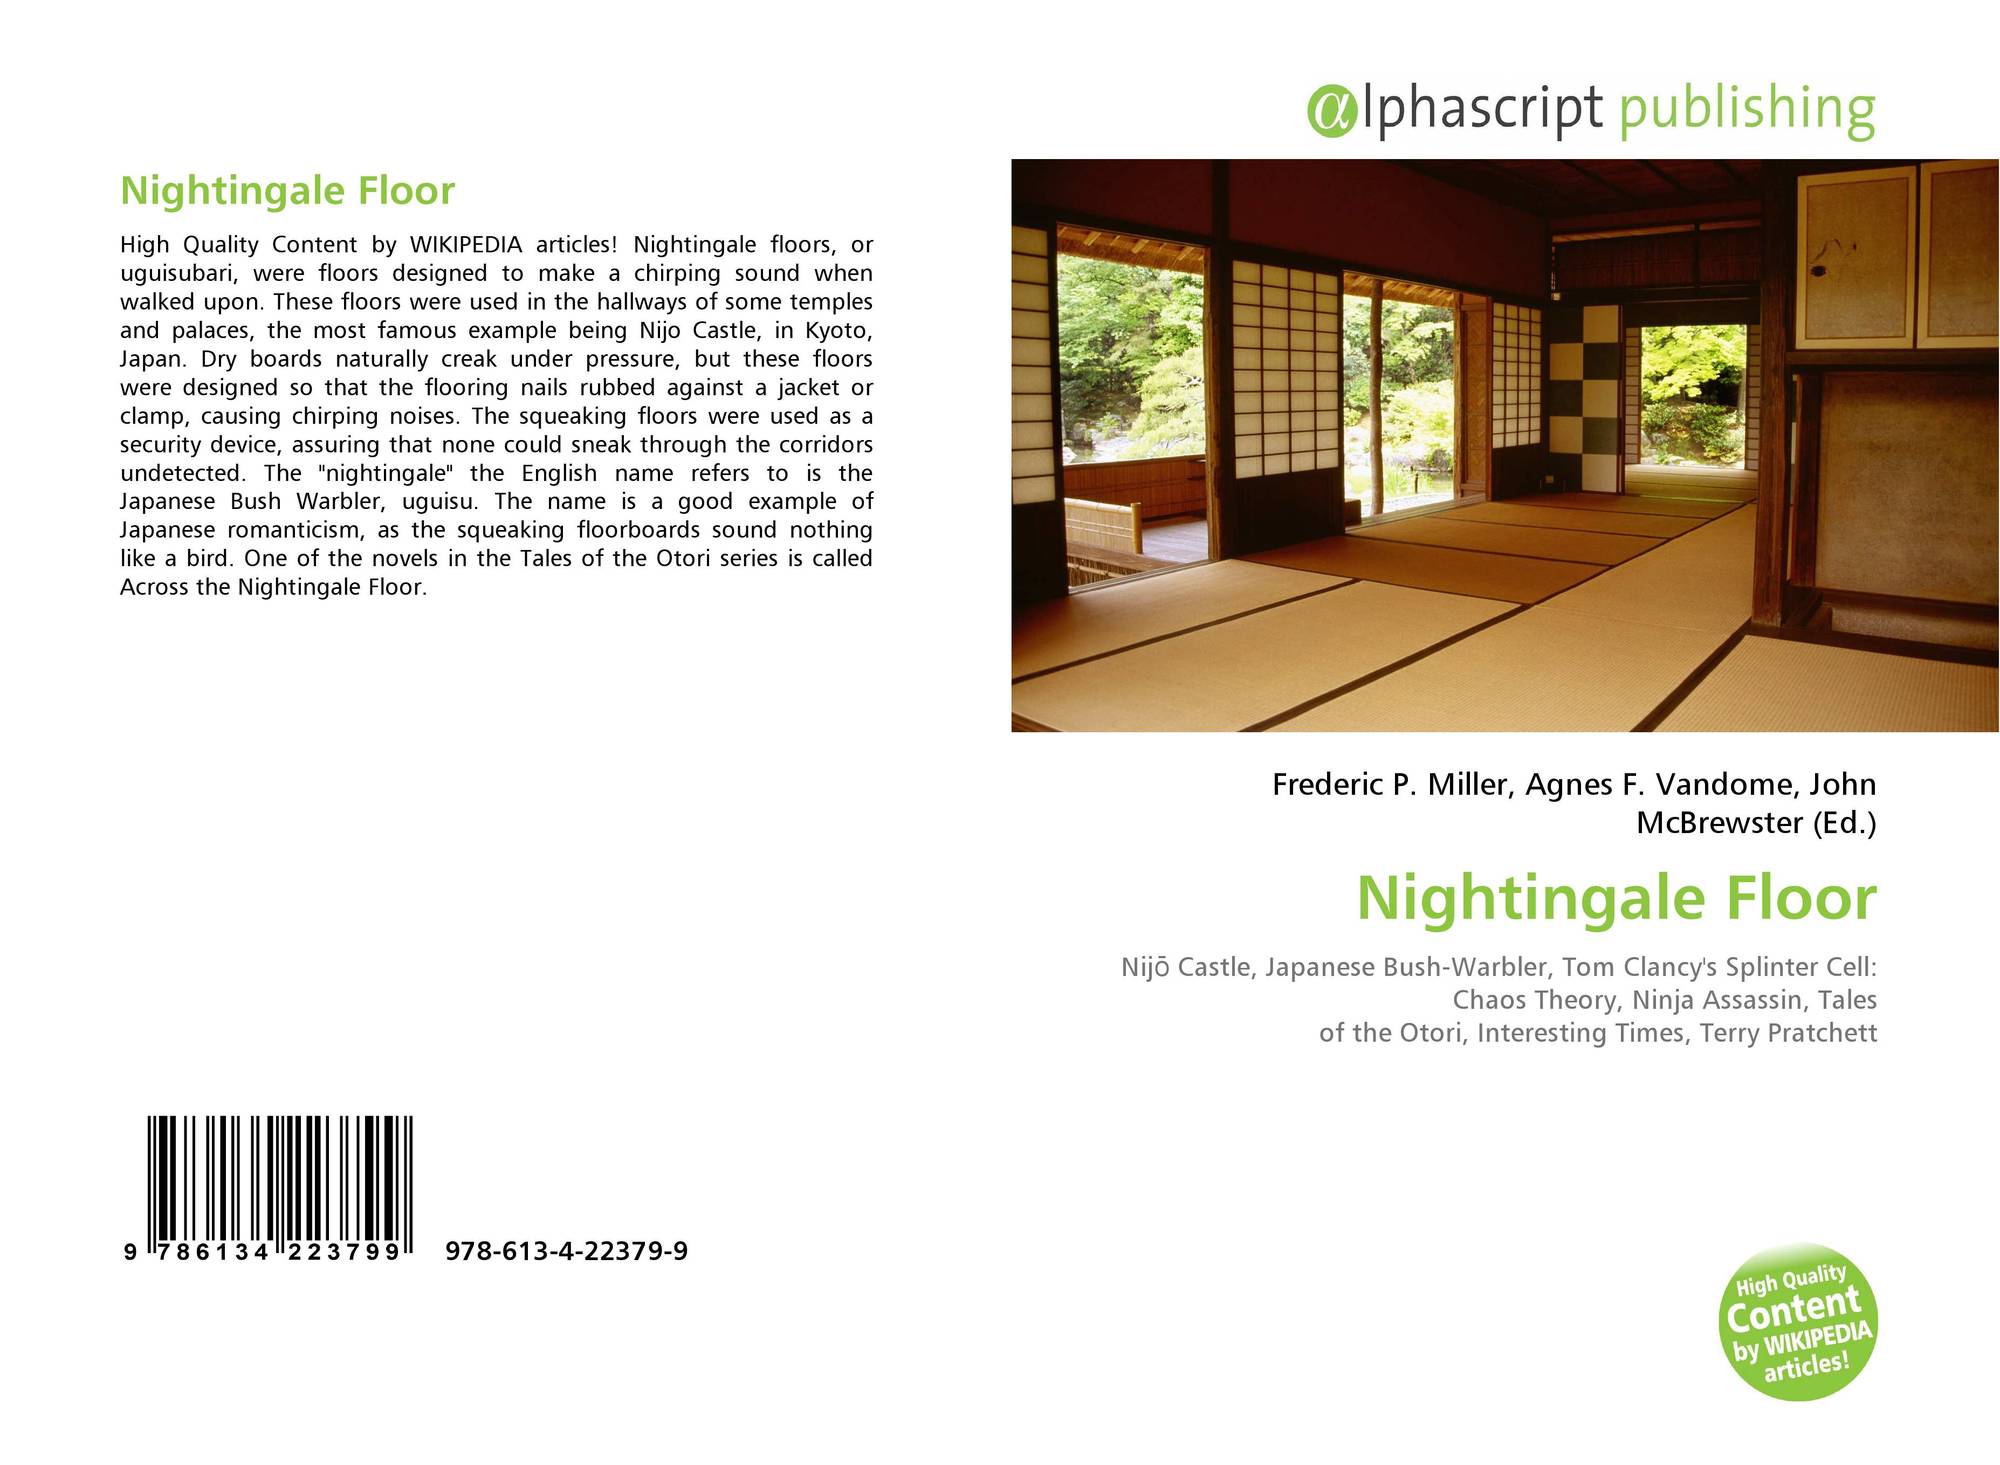 the nightingale floor